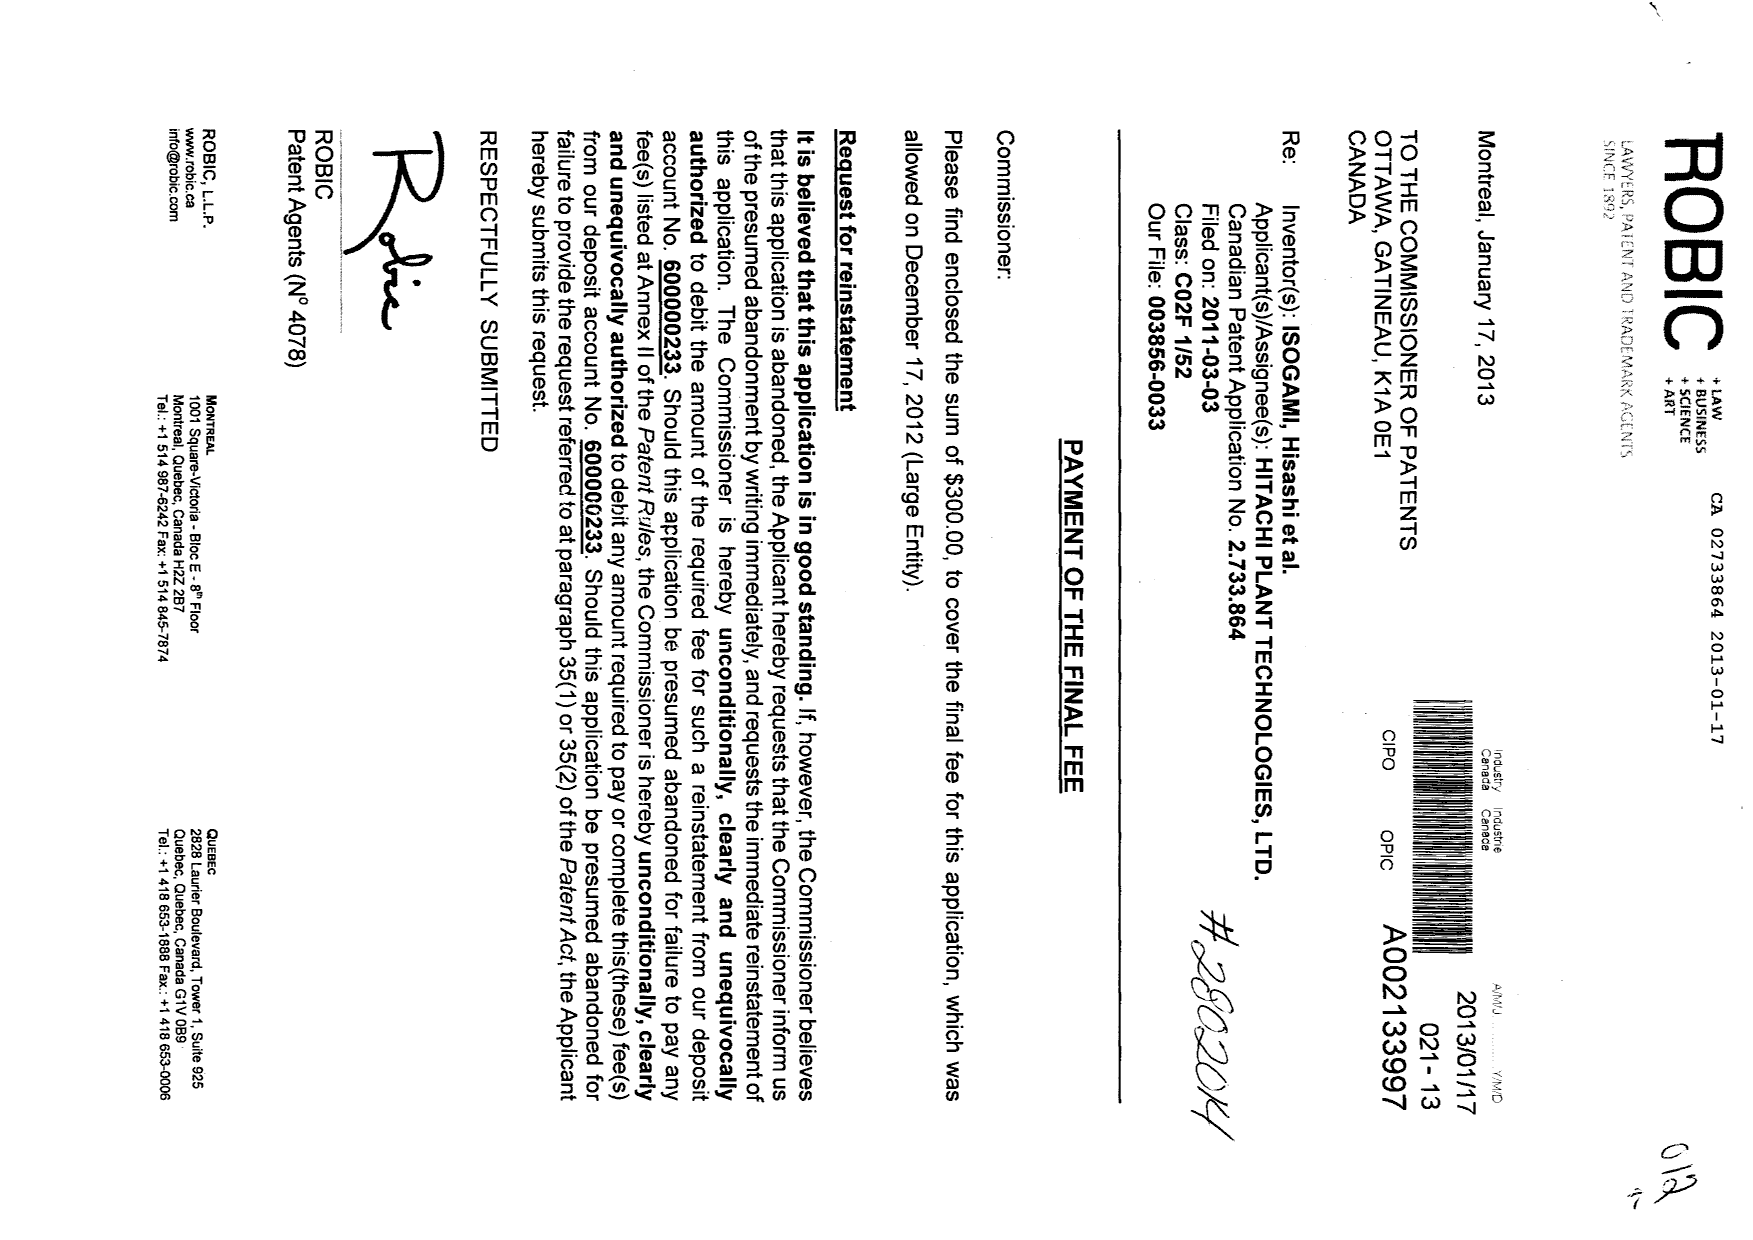 Canadian Patent Document 2733864. Correspondence 20121217. Image 1 of 2